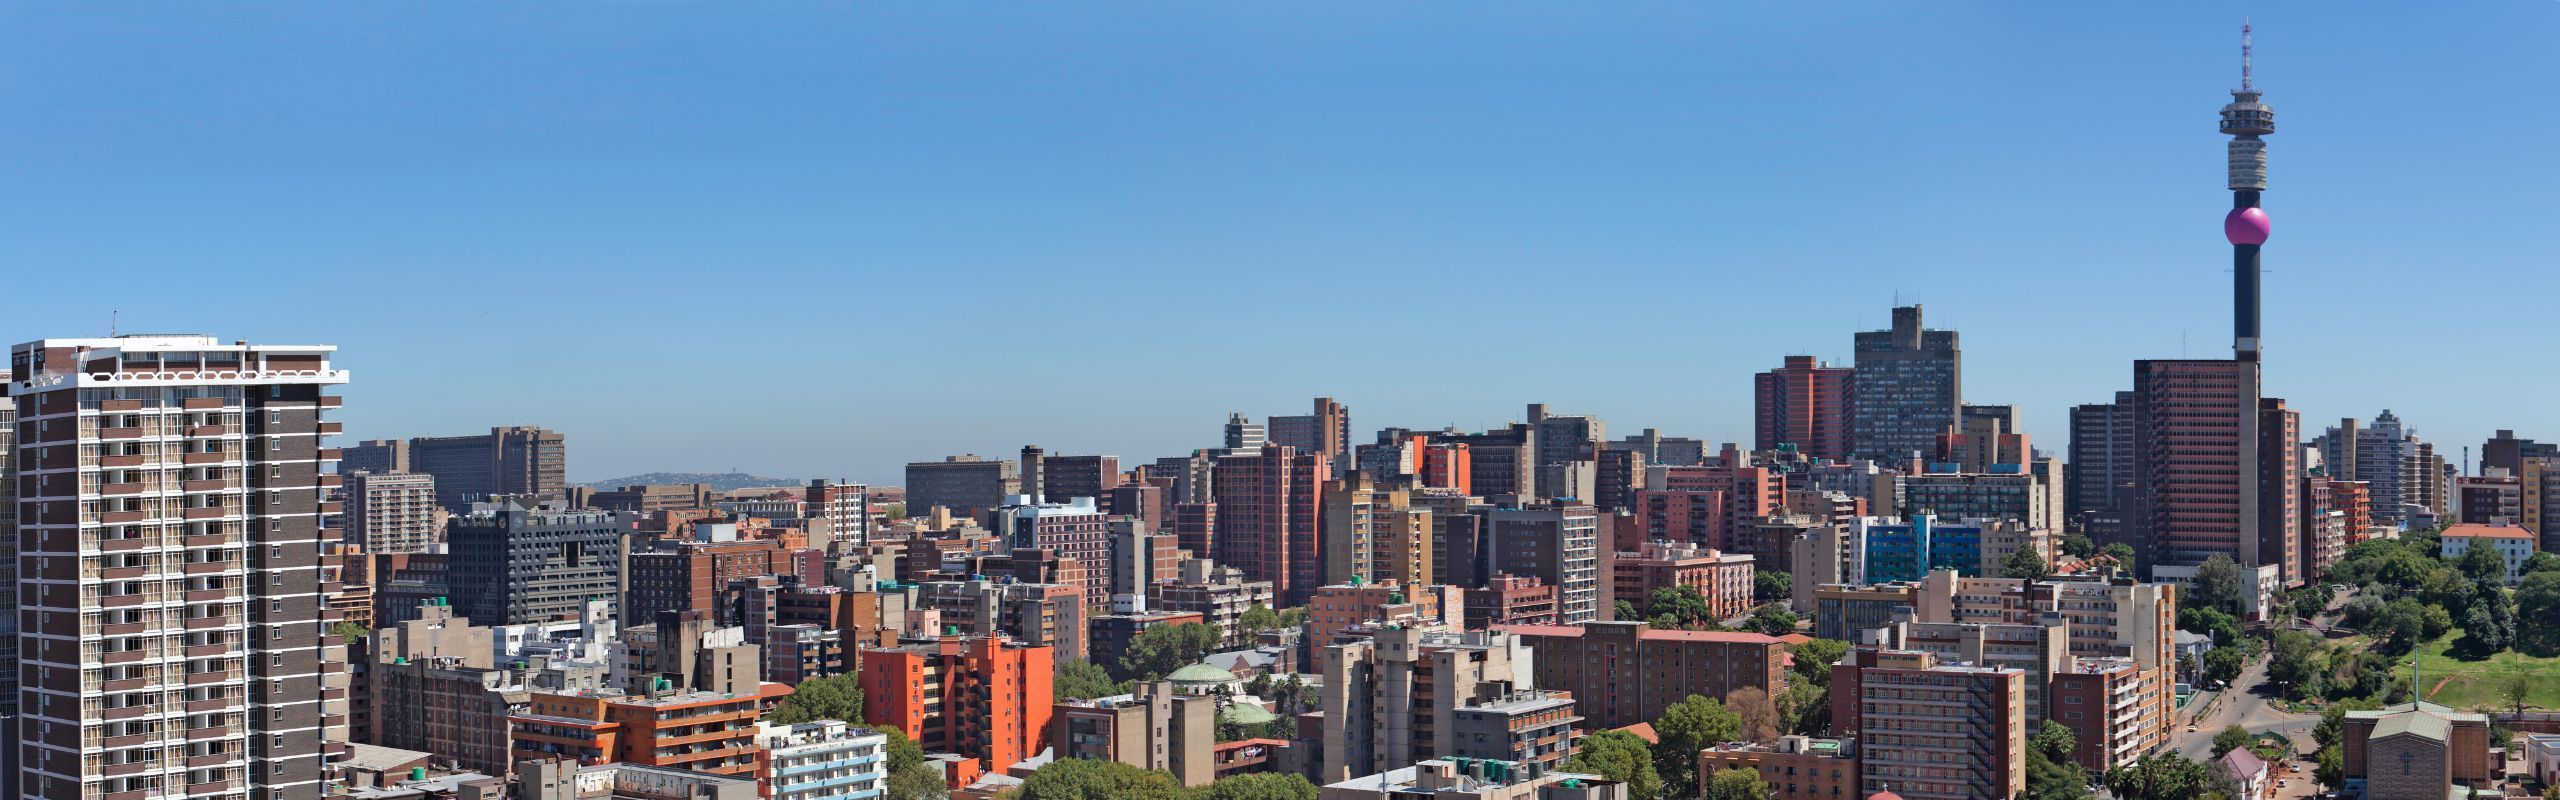 Image of the Johannesburg skyline